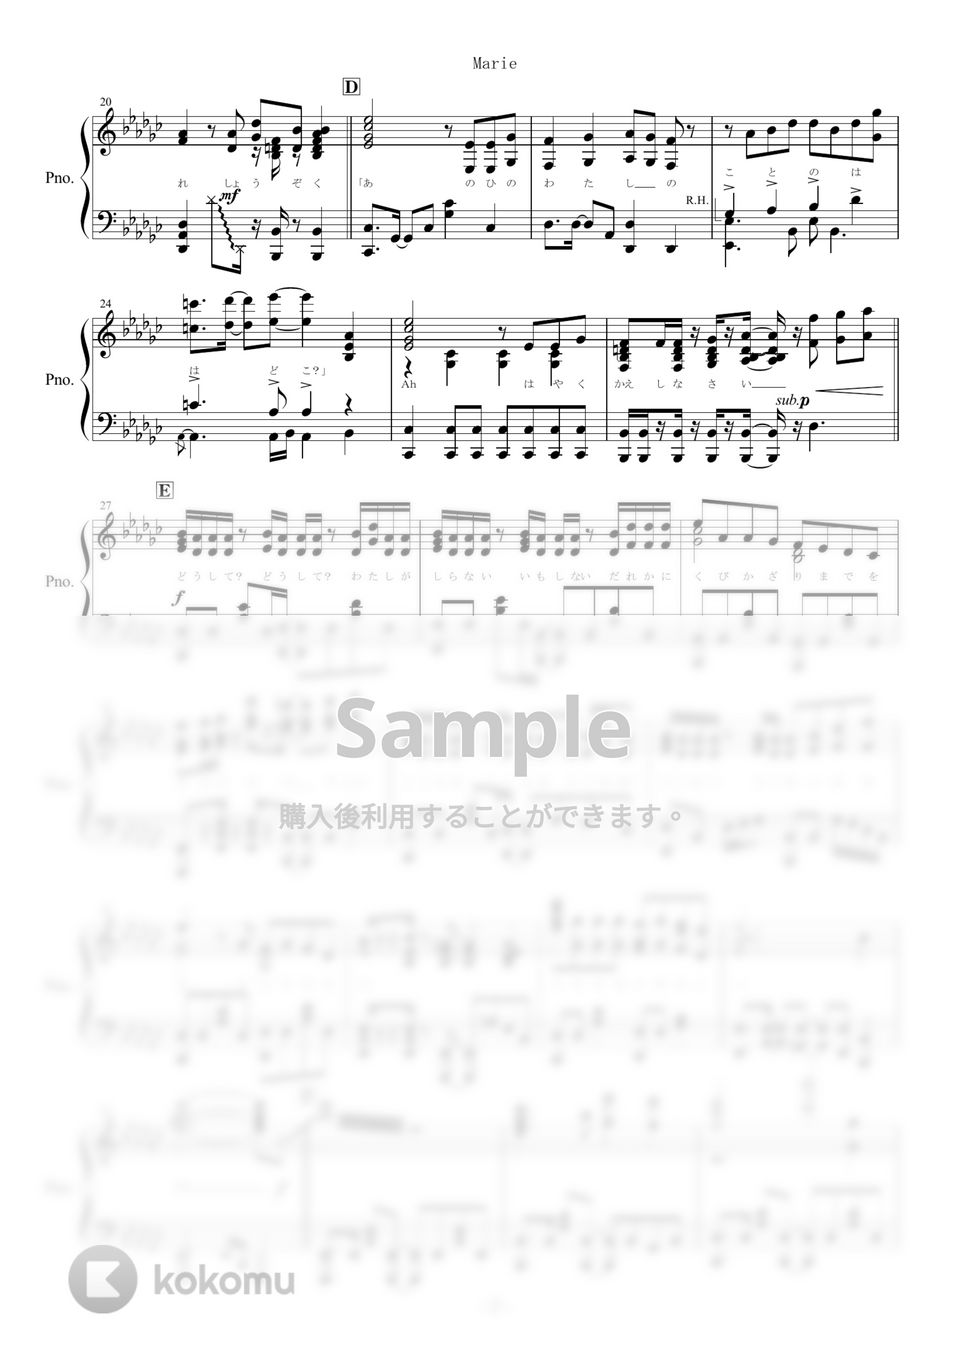 CHiCO with HoneyWorks - Marie (ピアノ楽譜 / 全６ページ / HoneyWorks) by yoshi